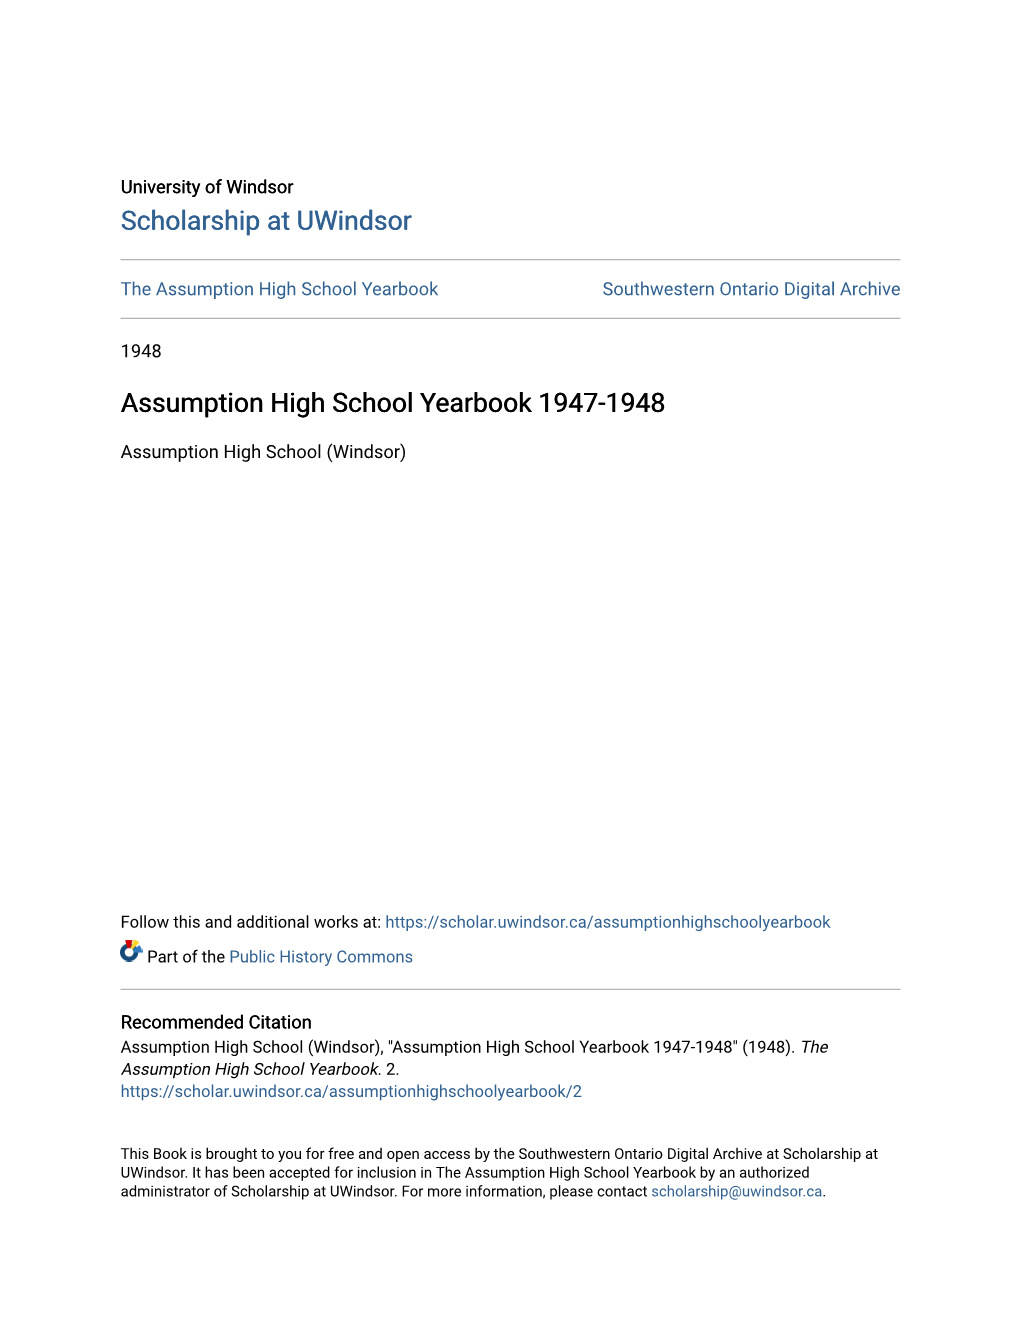 Assumption High School Yearbook 1947-1948